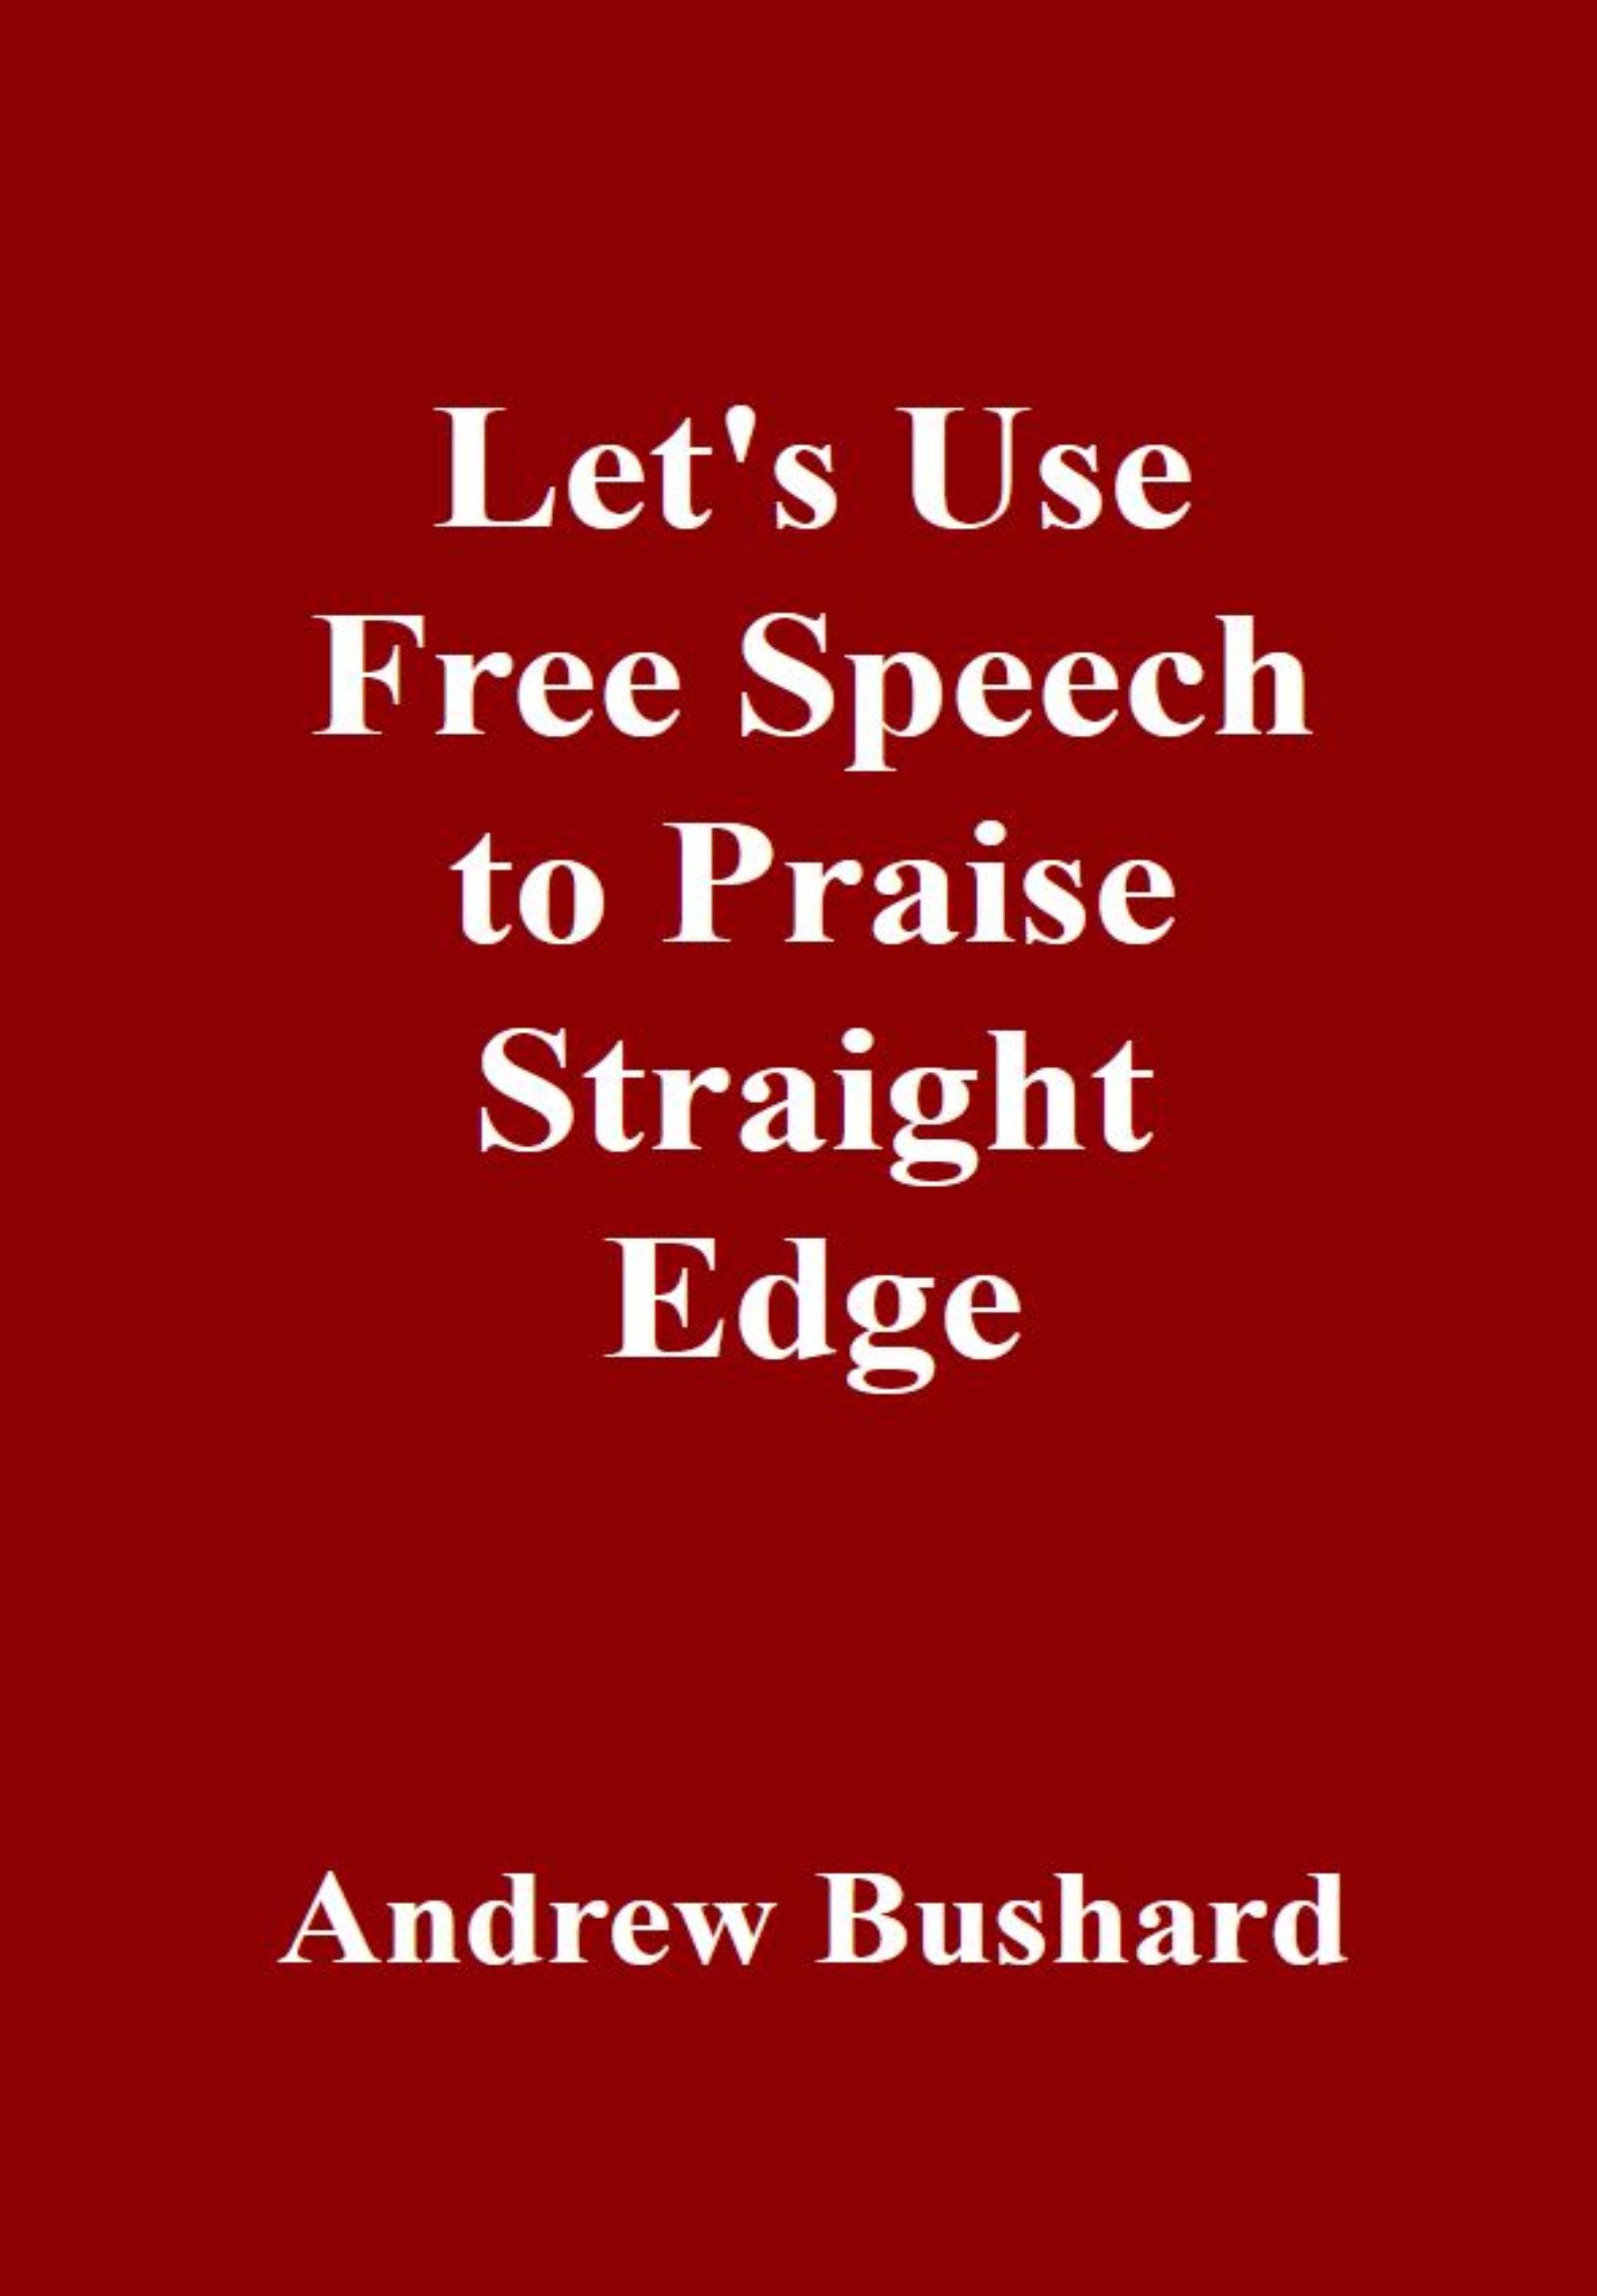 Let's Use Free Speech to Praise Straight Edge